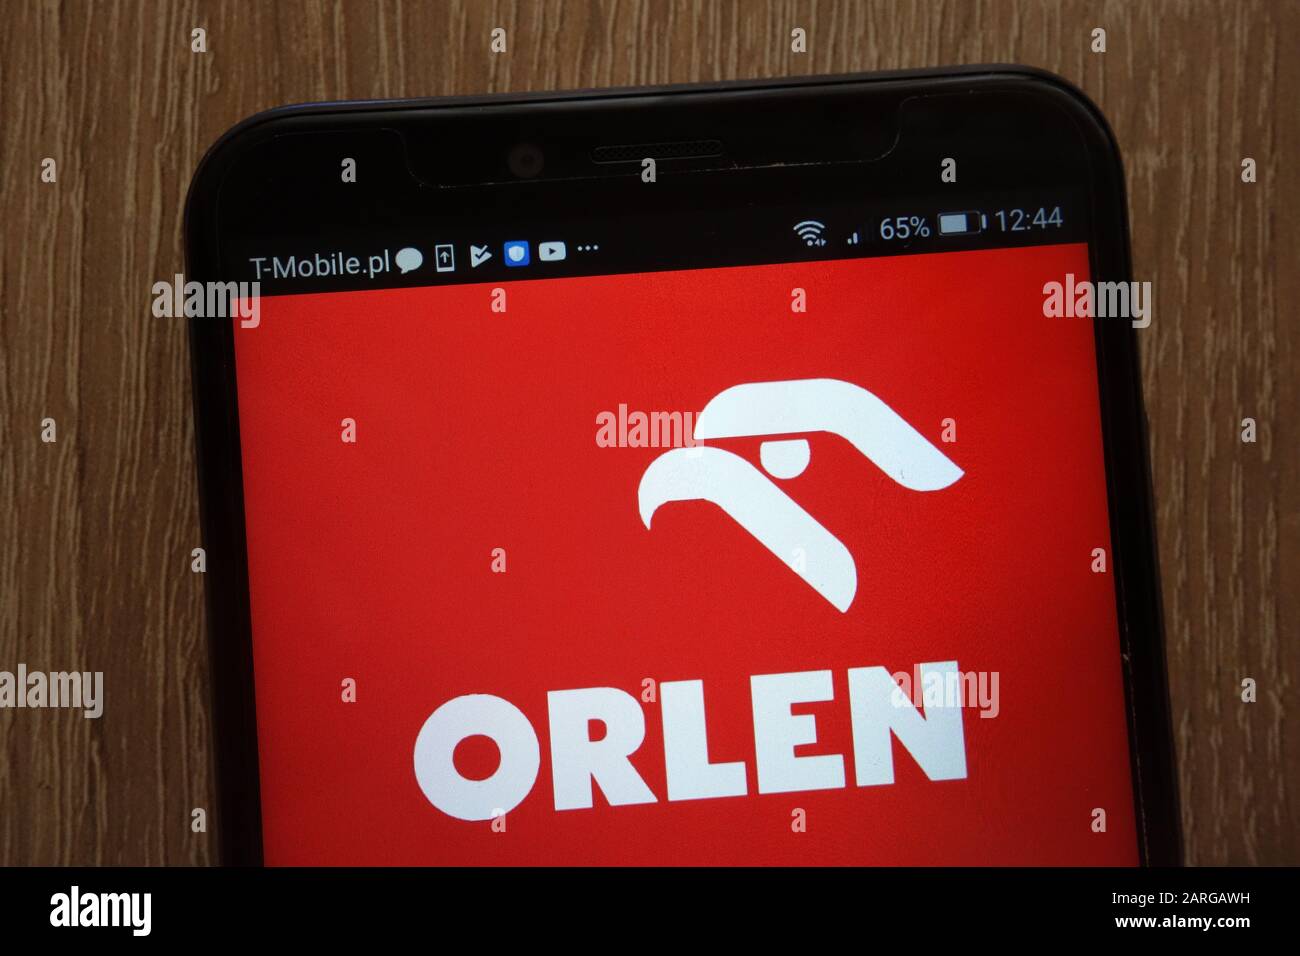 PKN ORLEN Group logo displayed on a modern smartphone Stock Photo